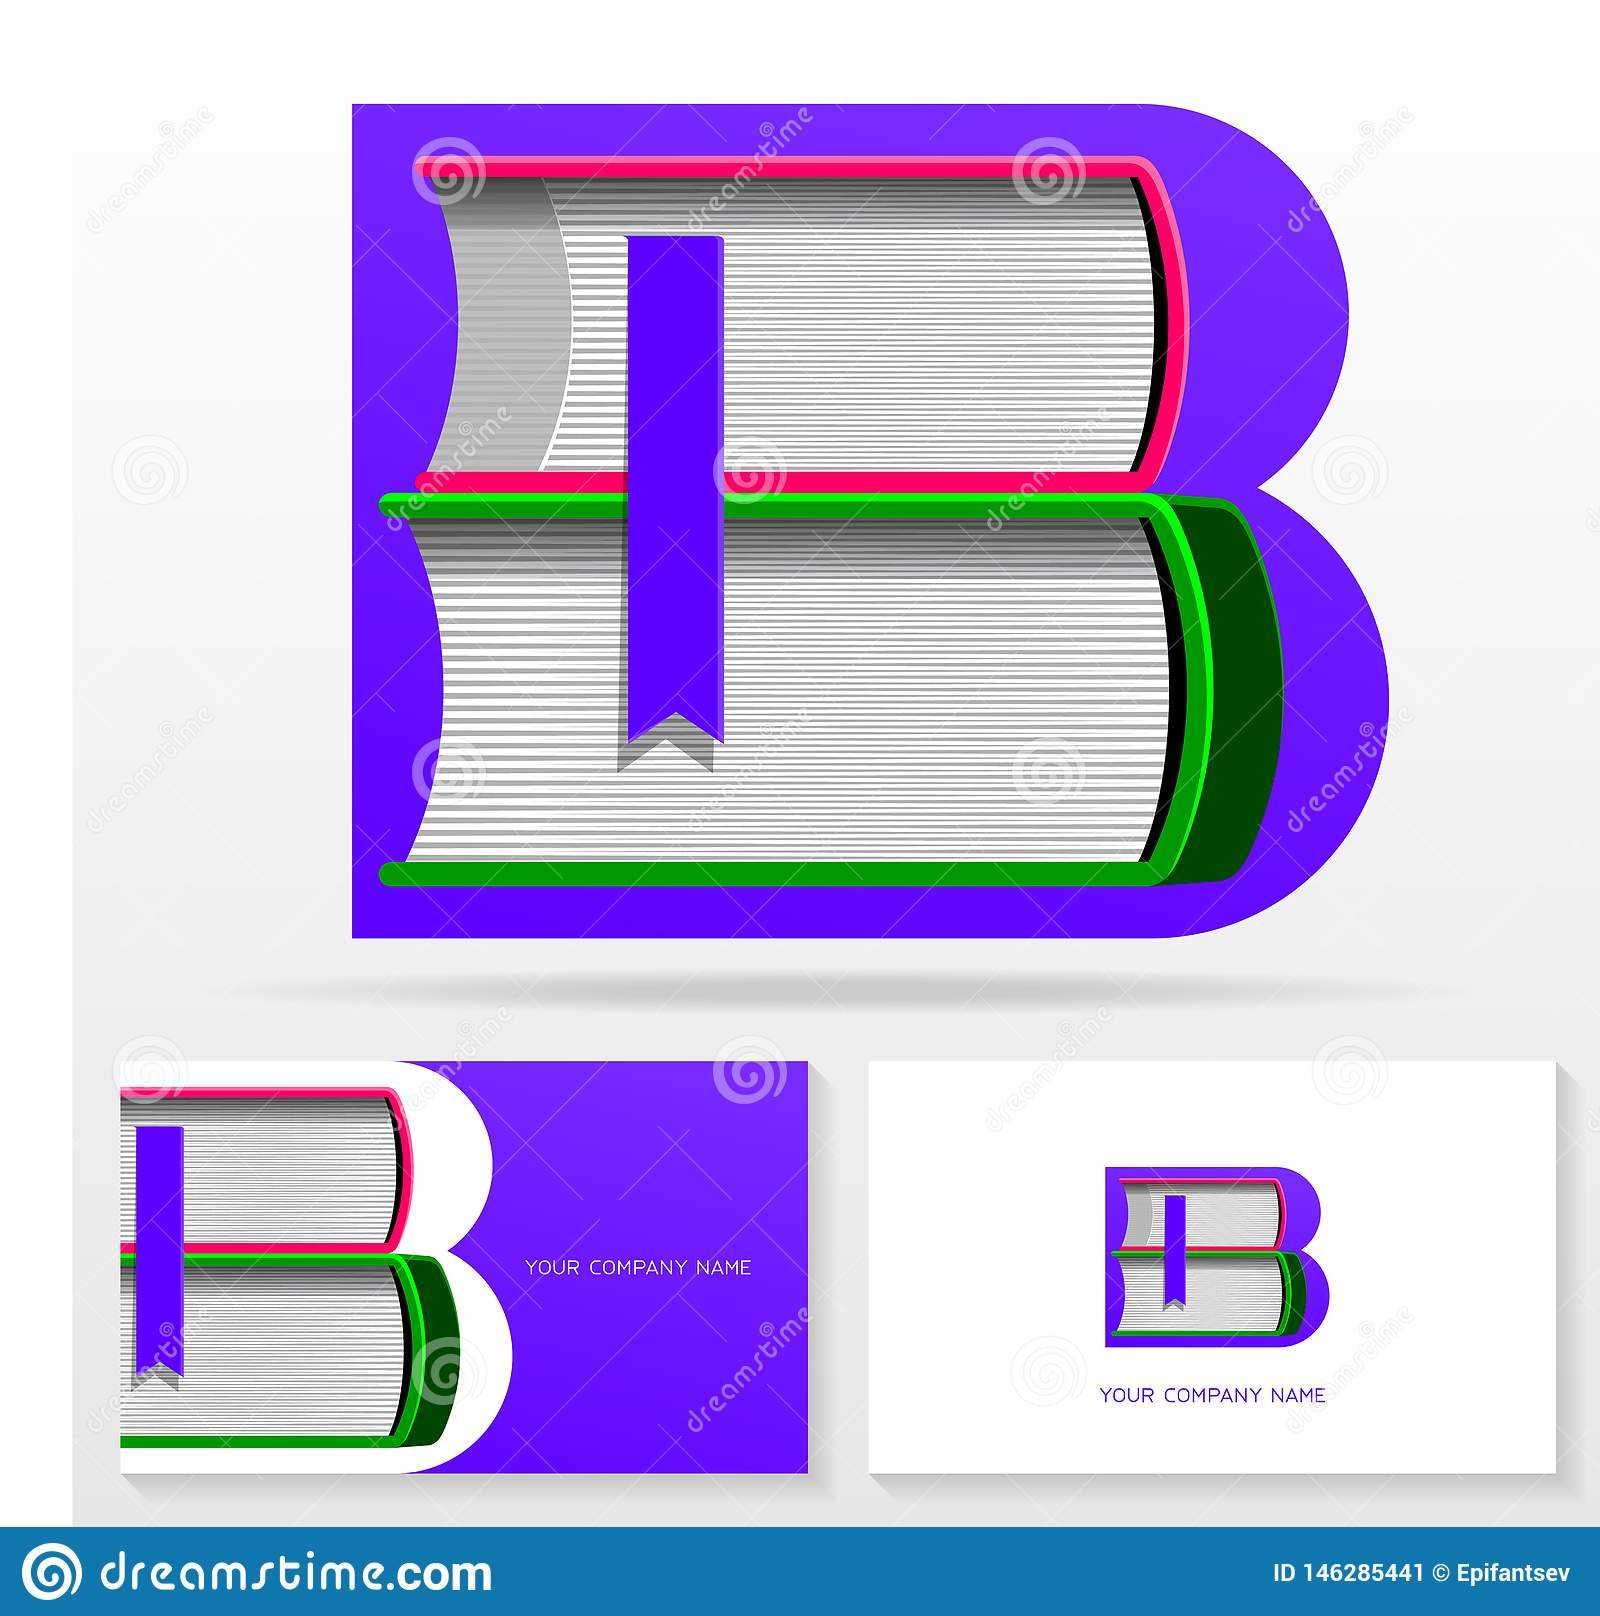 Letter B Logo Design Template. Letter B Made Of Books Intended For Library Catalog Card Template